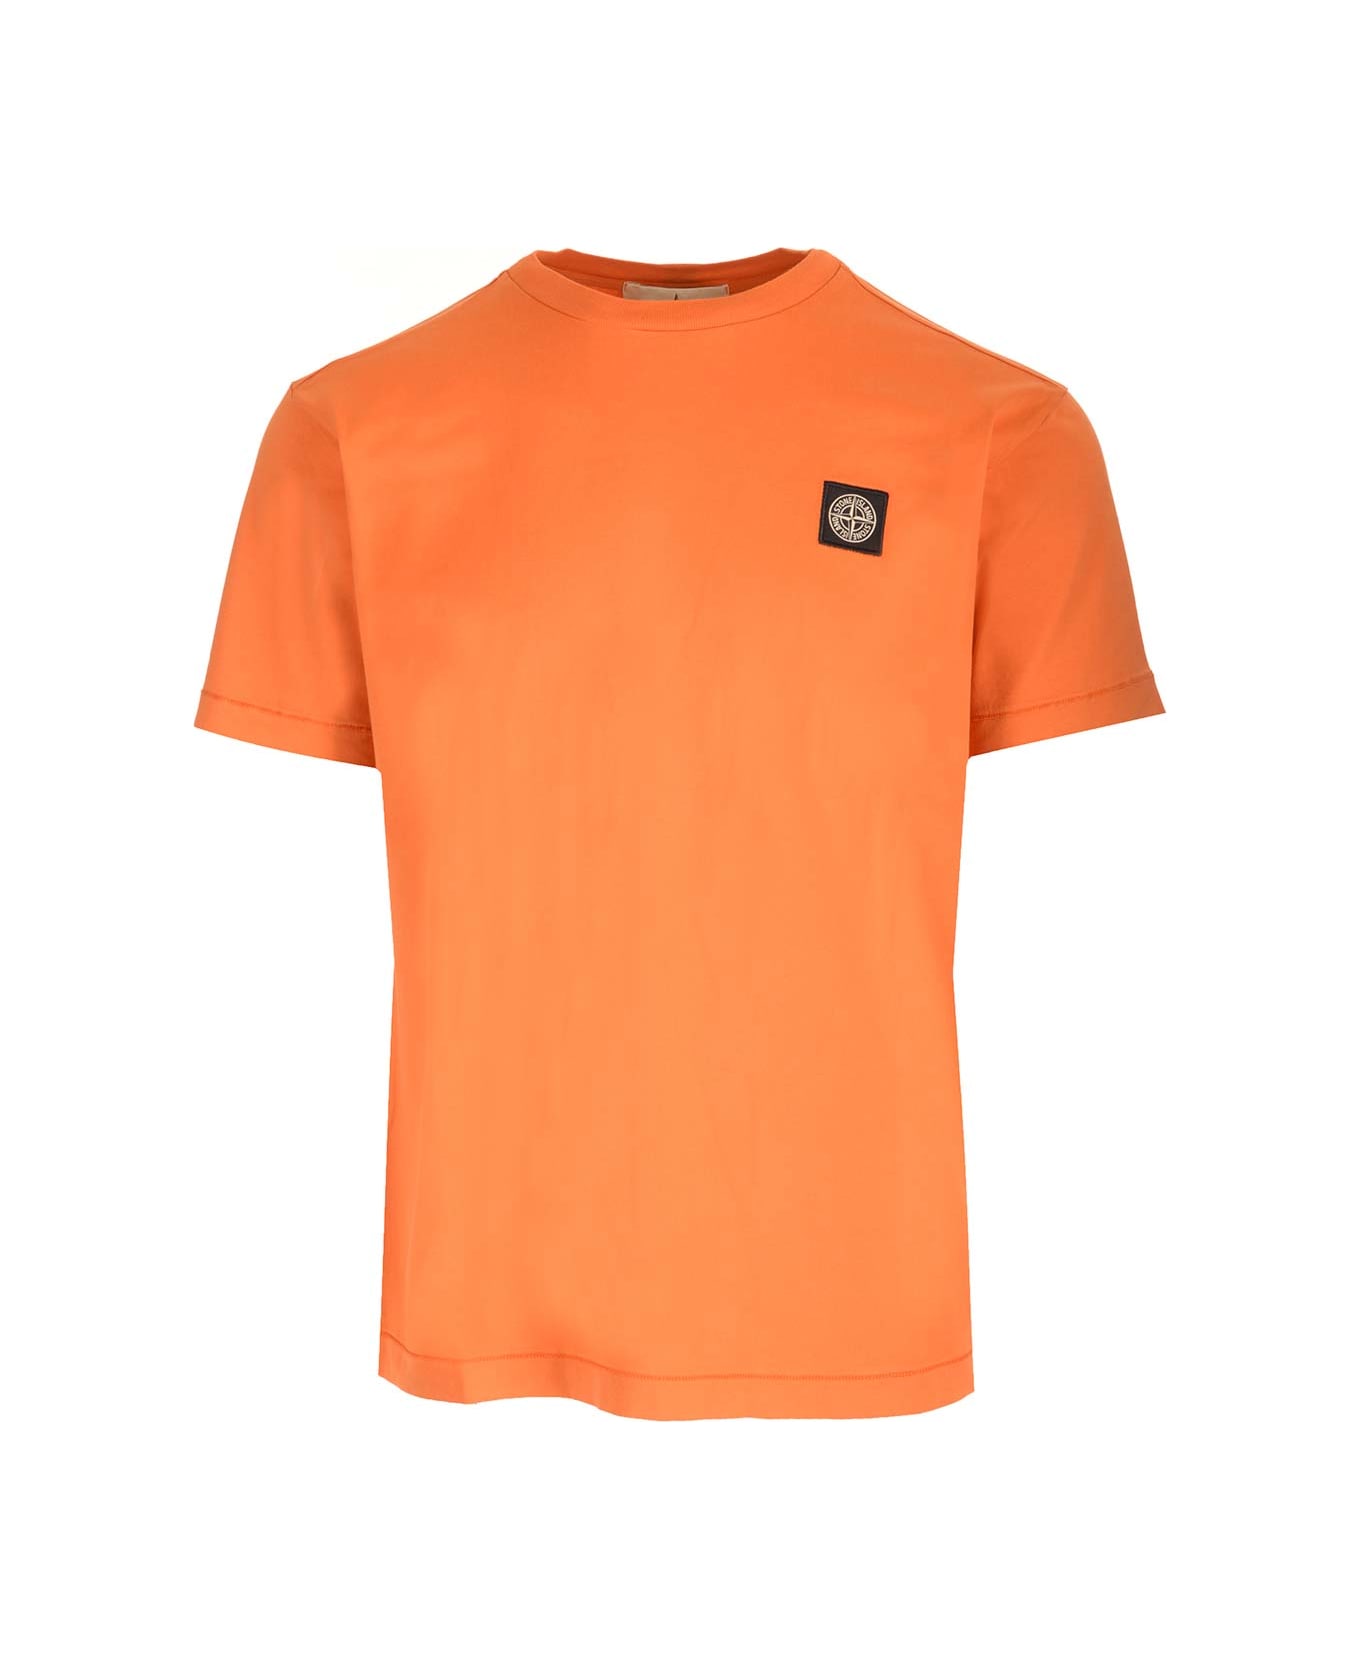 Stone Island Classic Fit T-shirt - Arancione